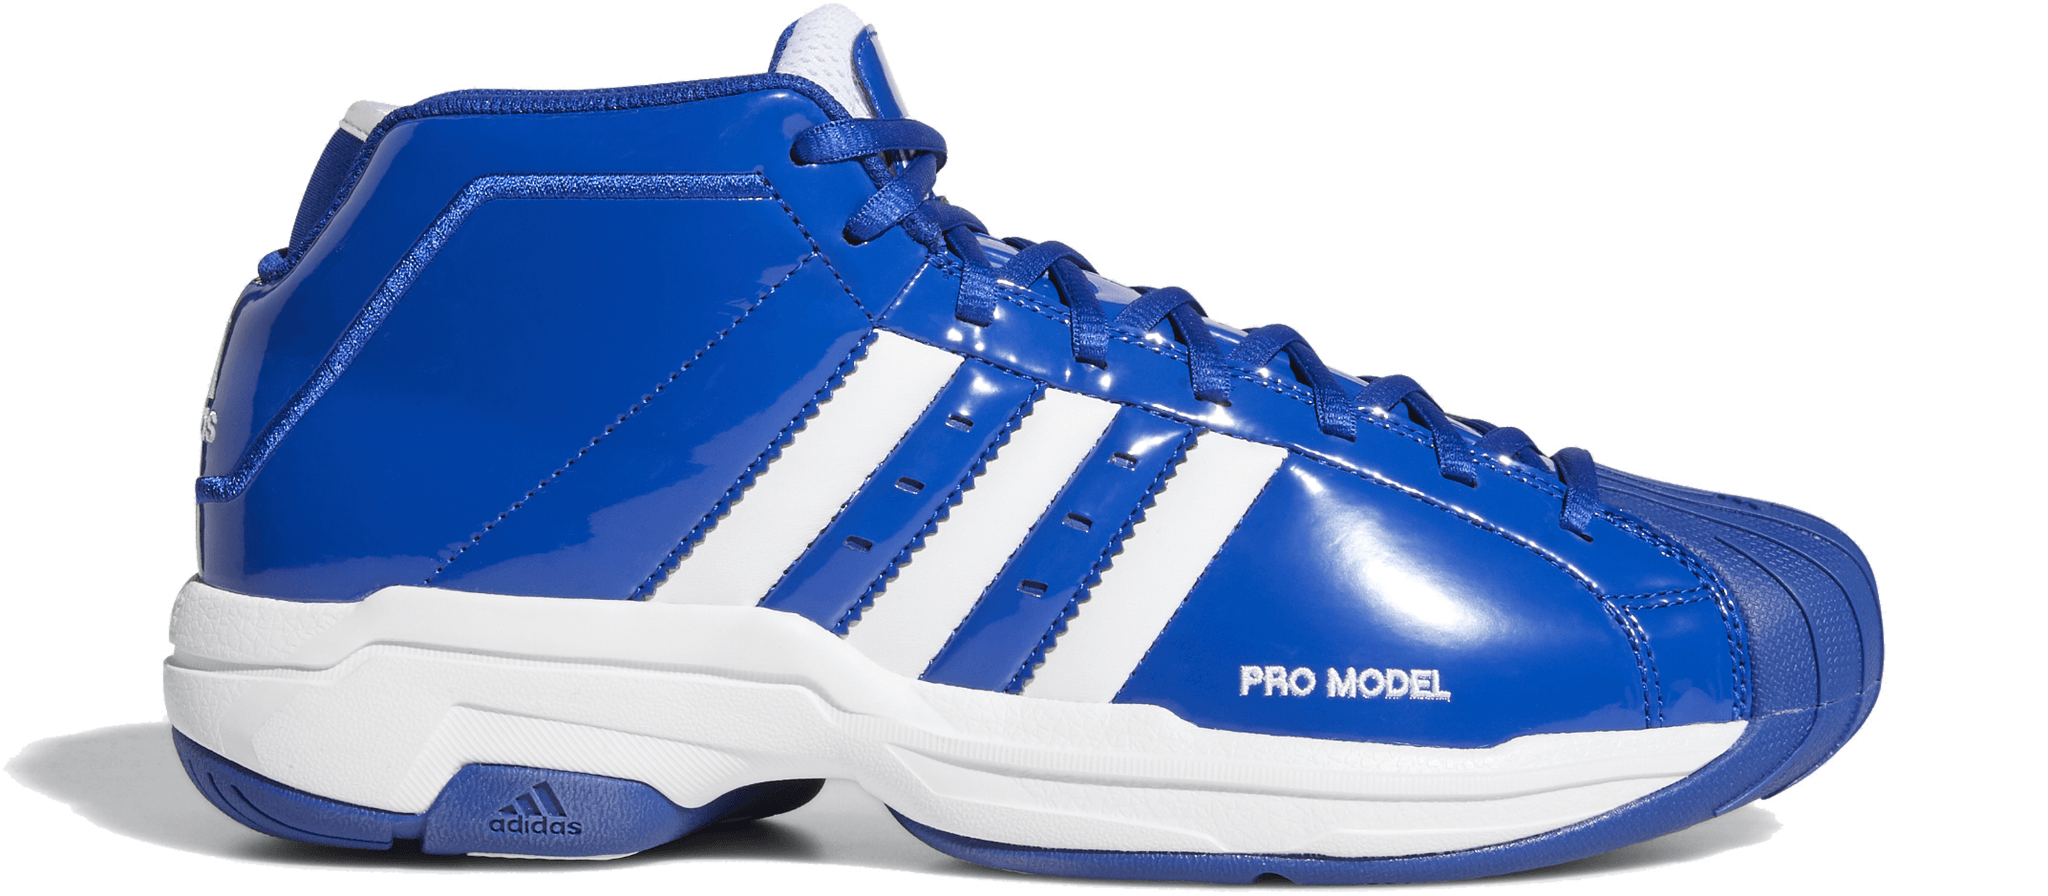 Adidas Pro Model 2G - Review, Deals, Pics of 19 Colorways